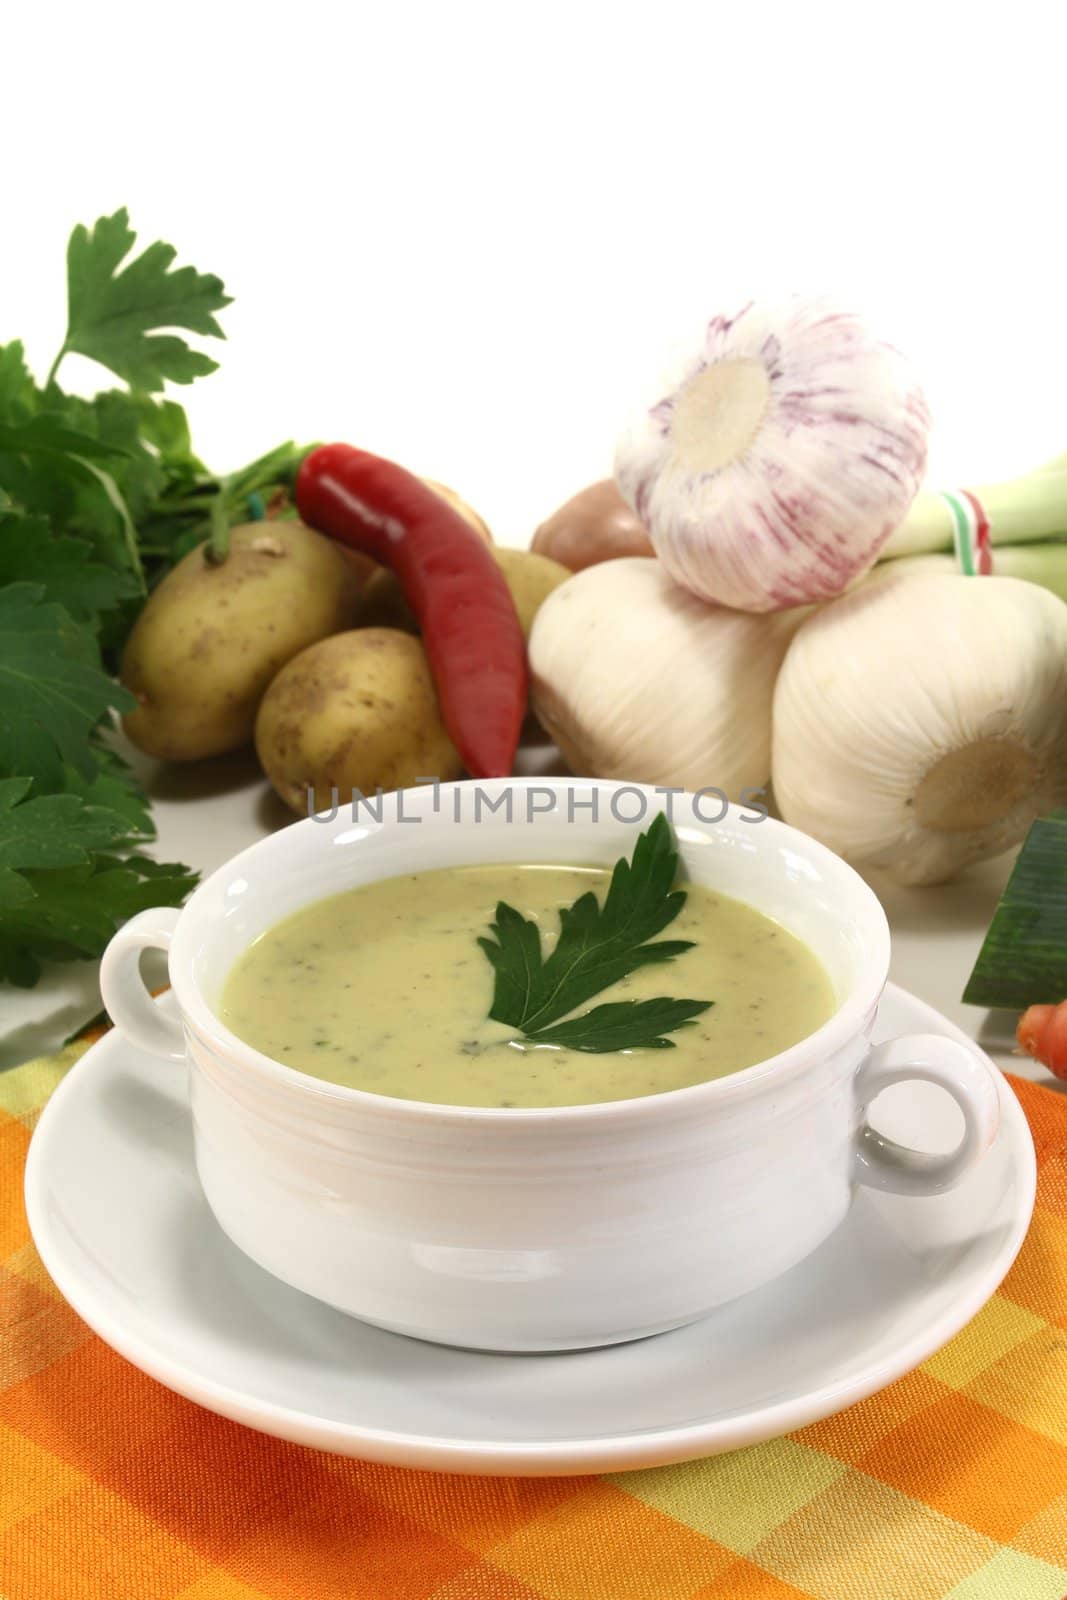 vegetable creme soup by silencefoto